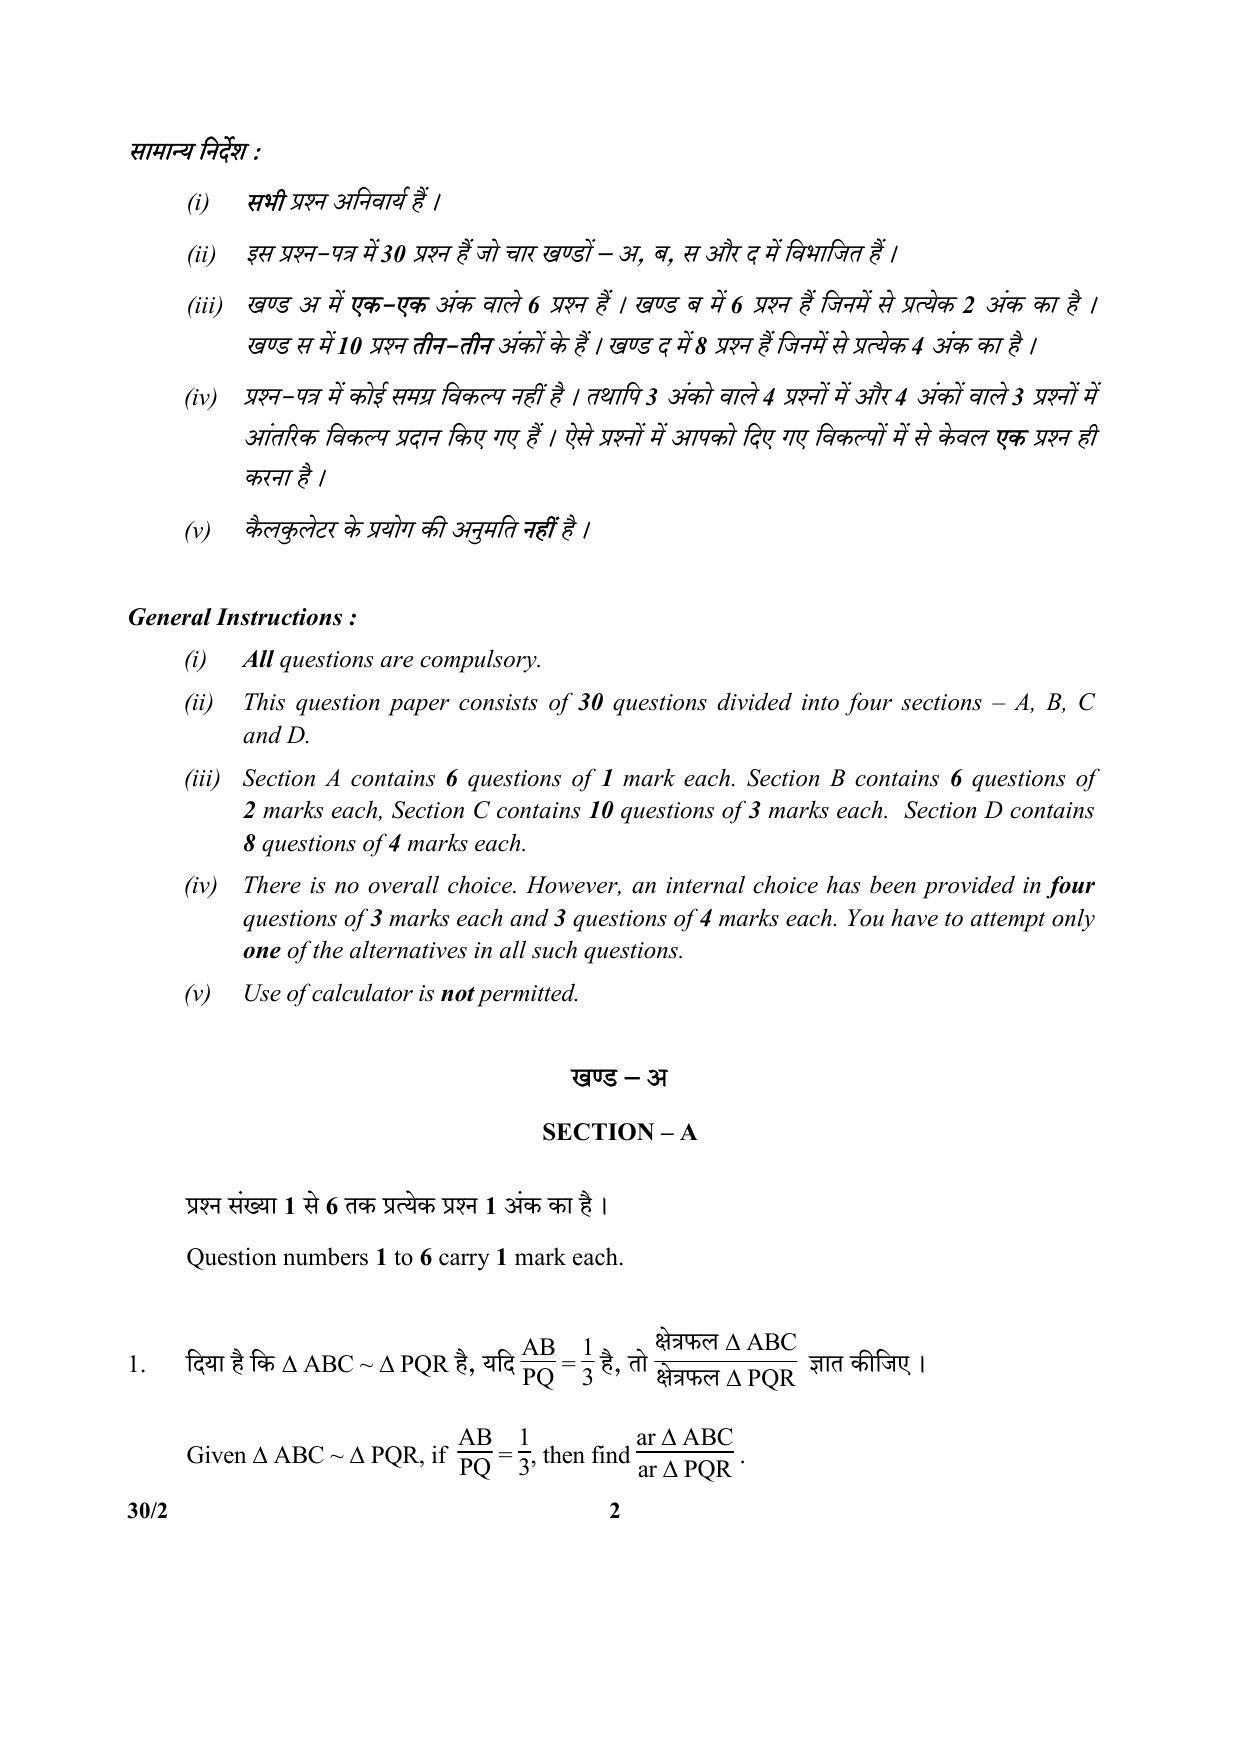 CBSE Class 10 30-2 SET-2 (Mathematics) 2018 Question Paper - Page 2